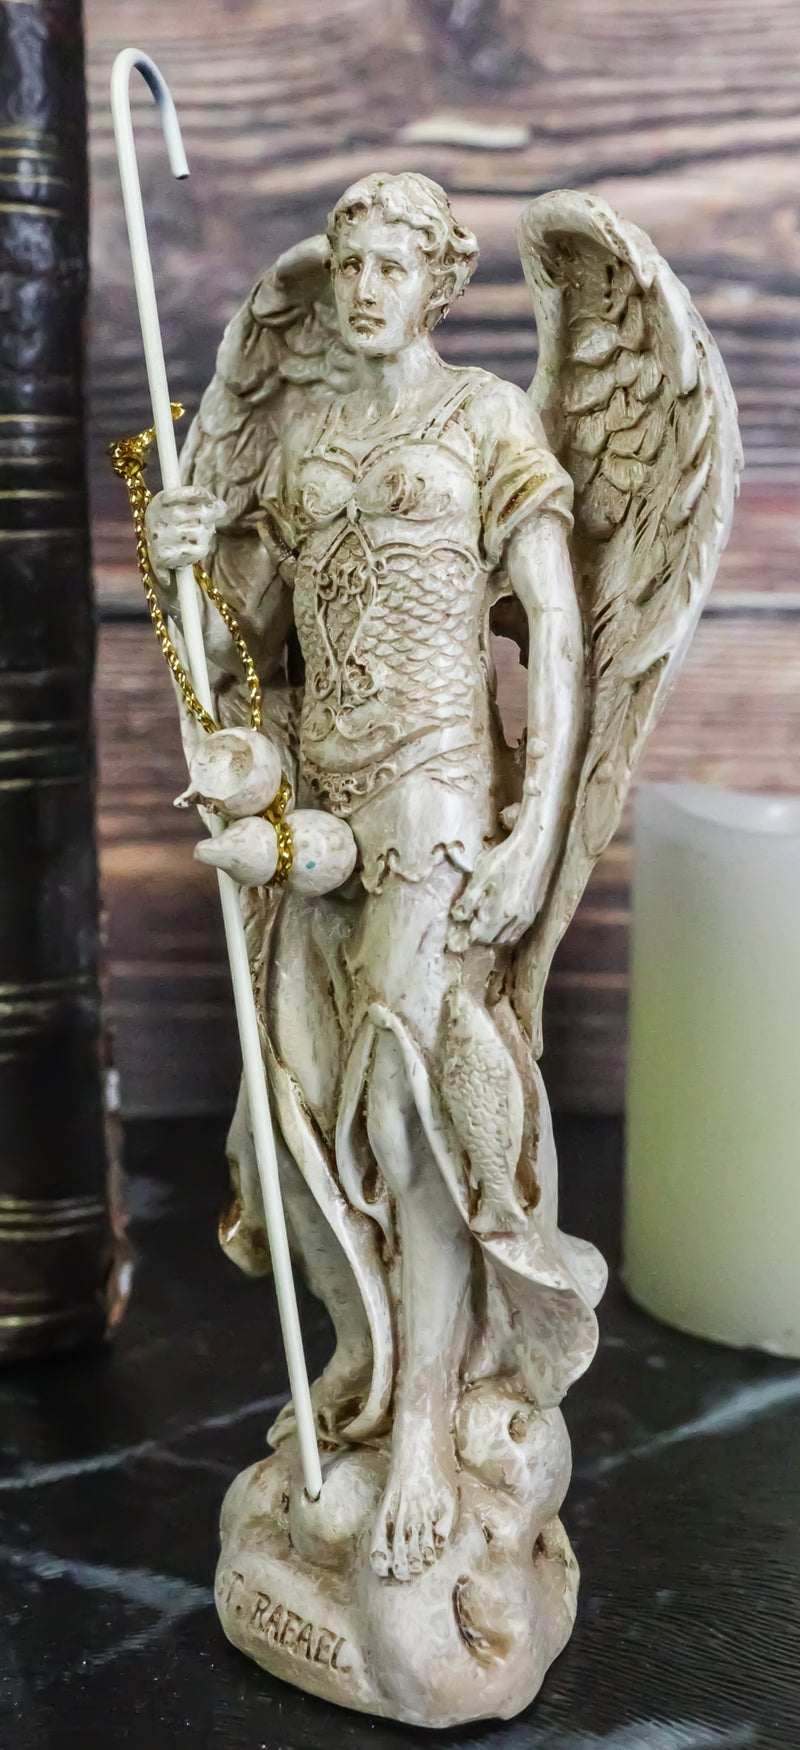 St. Raphael, the Archangel - God Heals